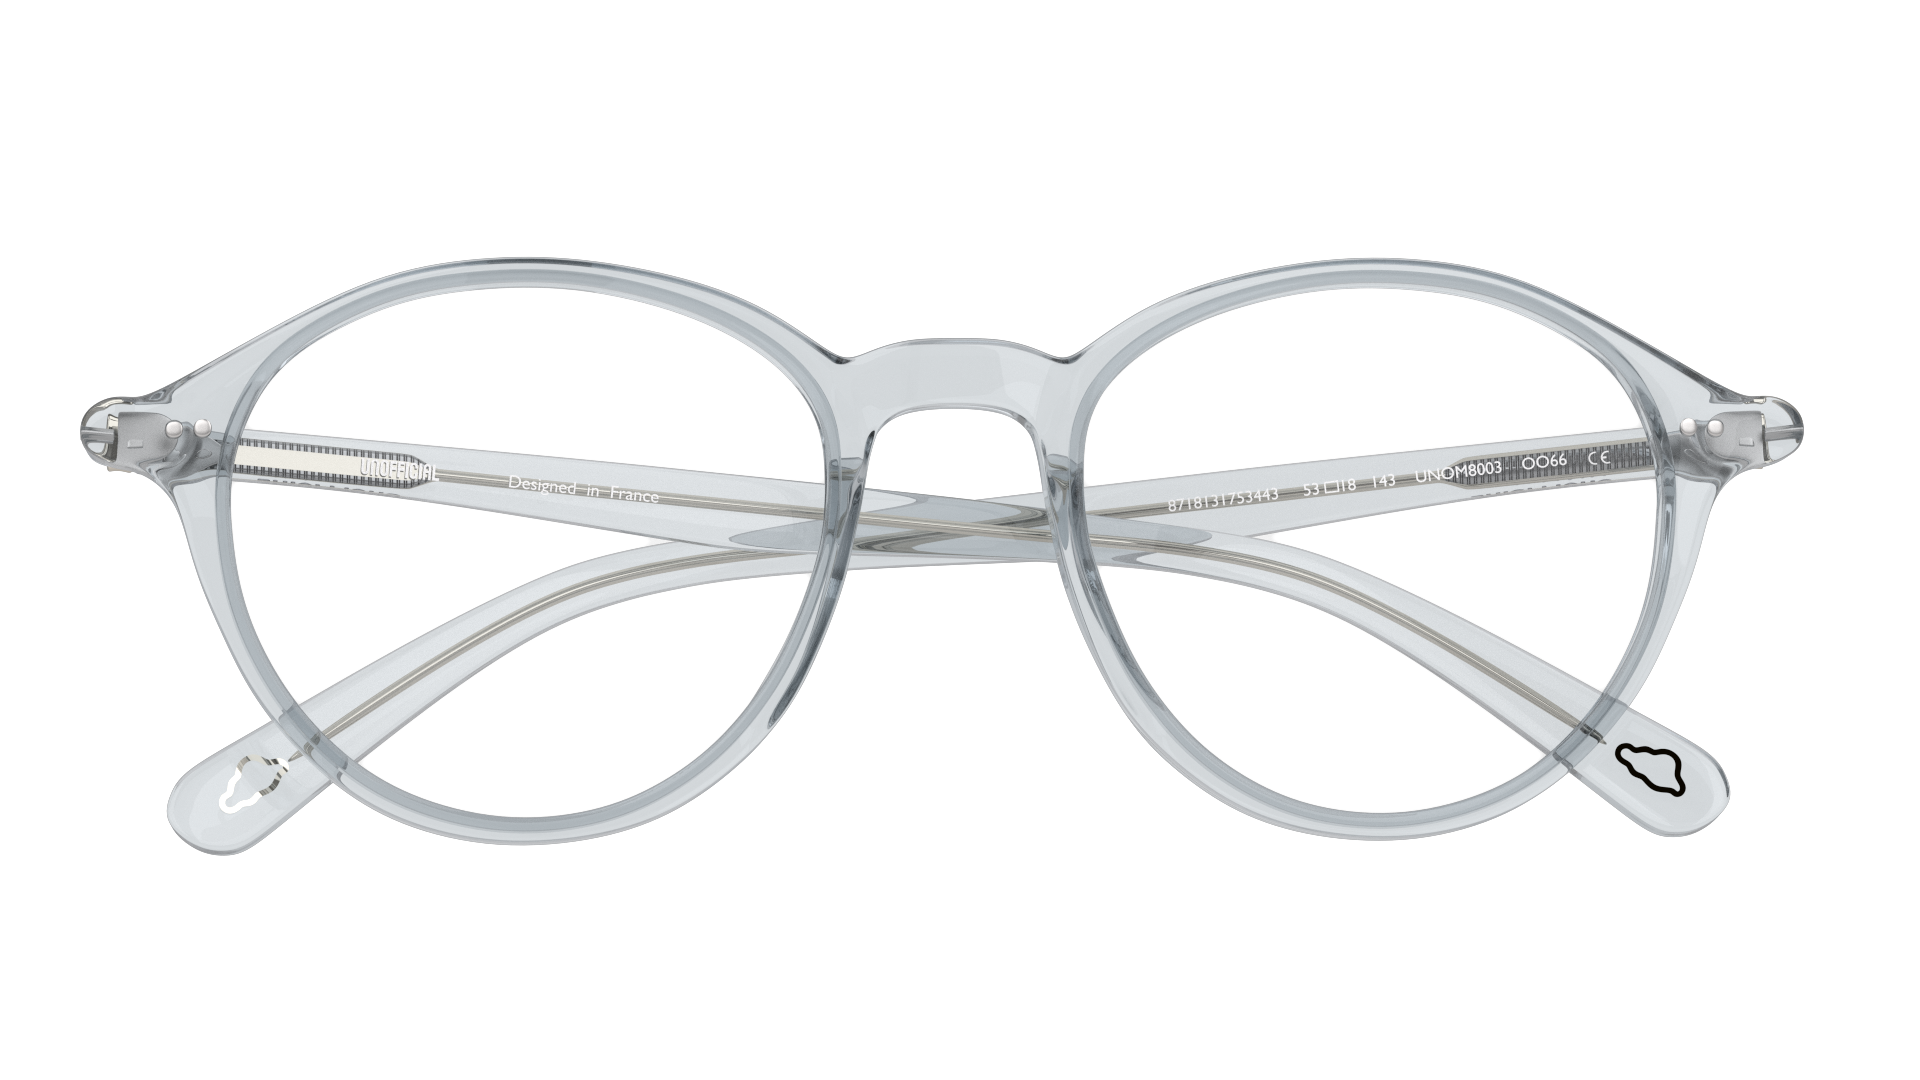 Folded Unofficial UNOM0185 (GG00) Glasses Transparent / Transparent, Grey